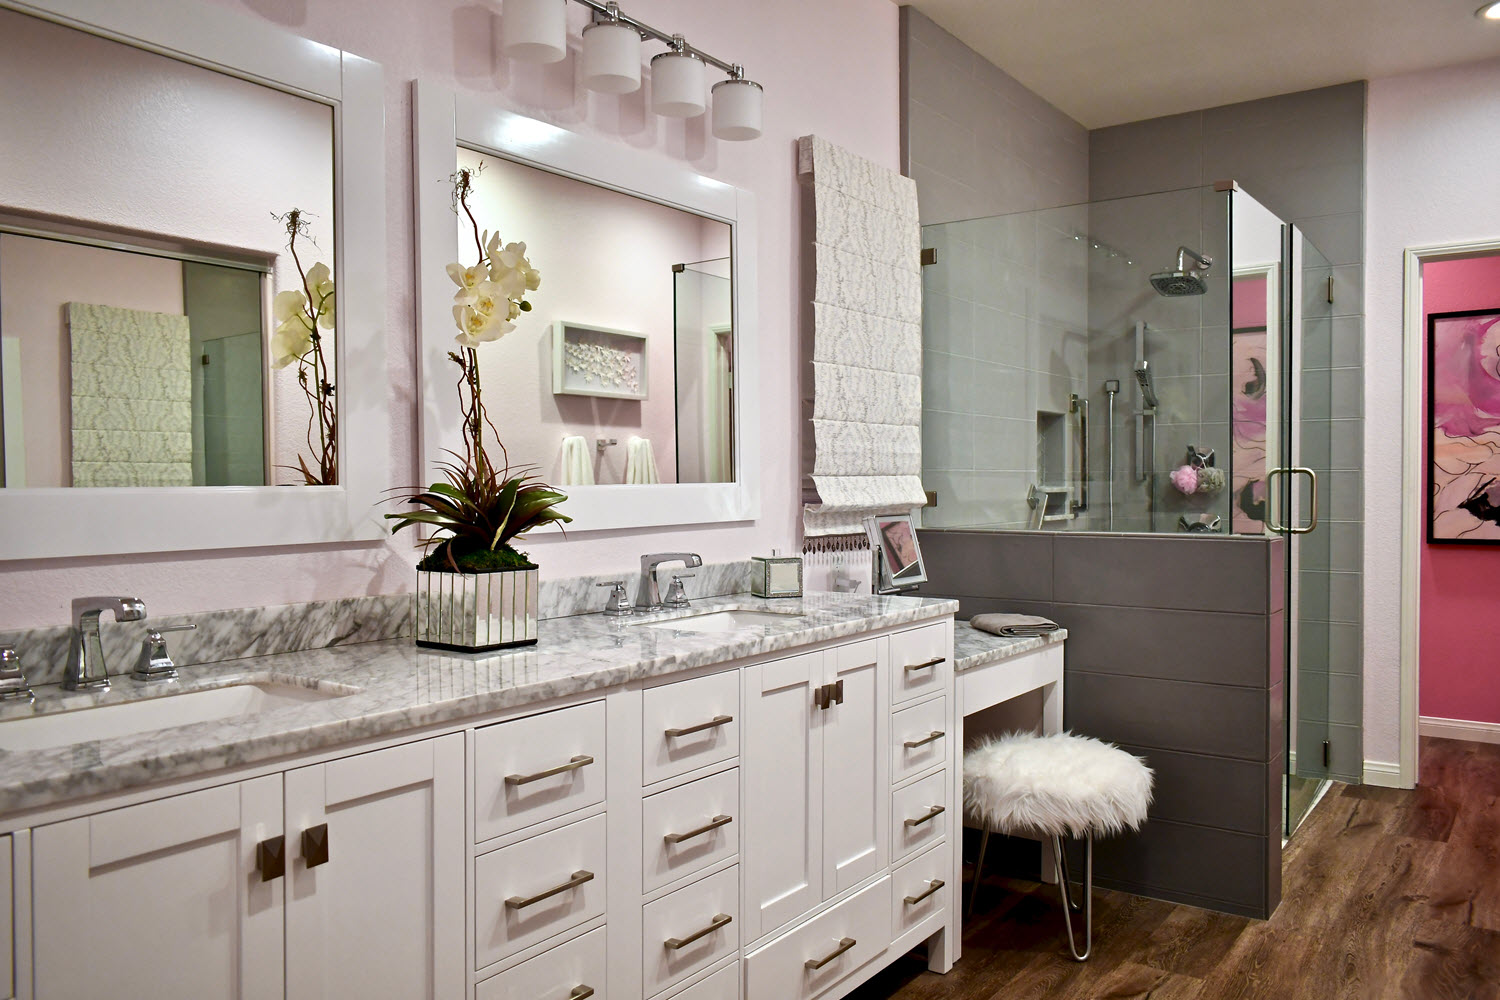 A Master Bedroom & Bath Get Pretty in Pink